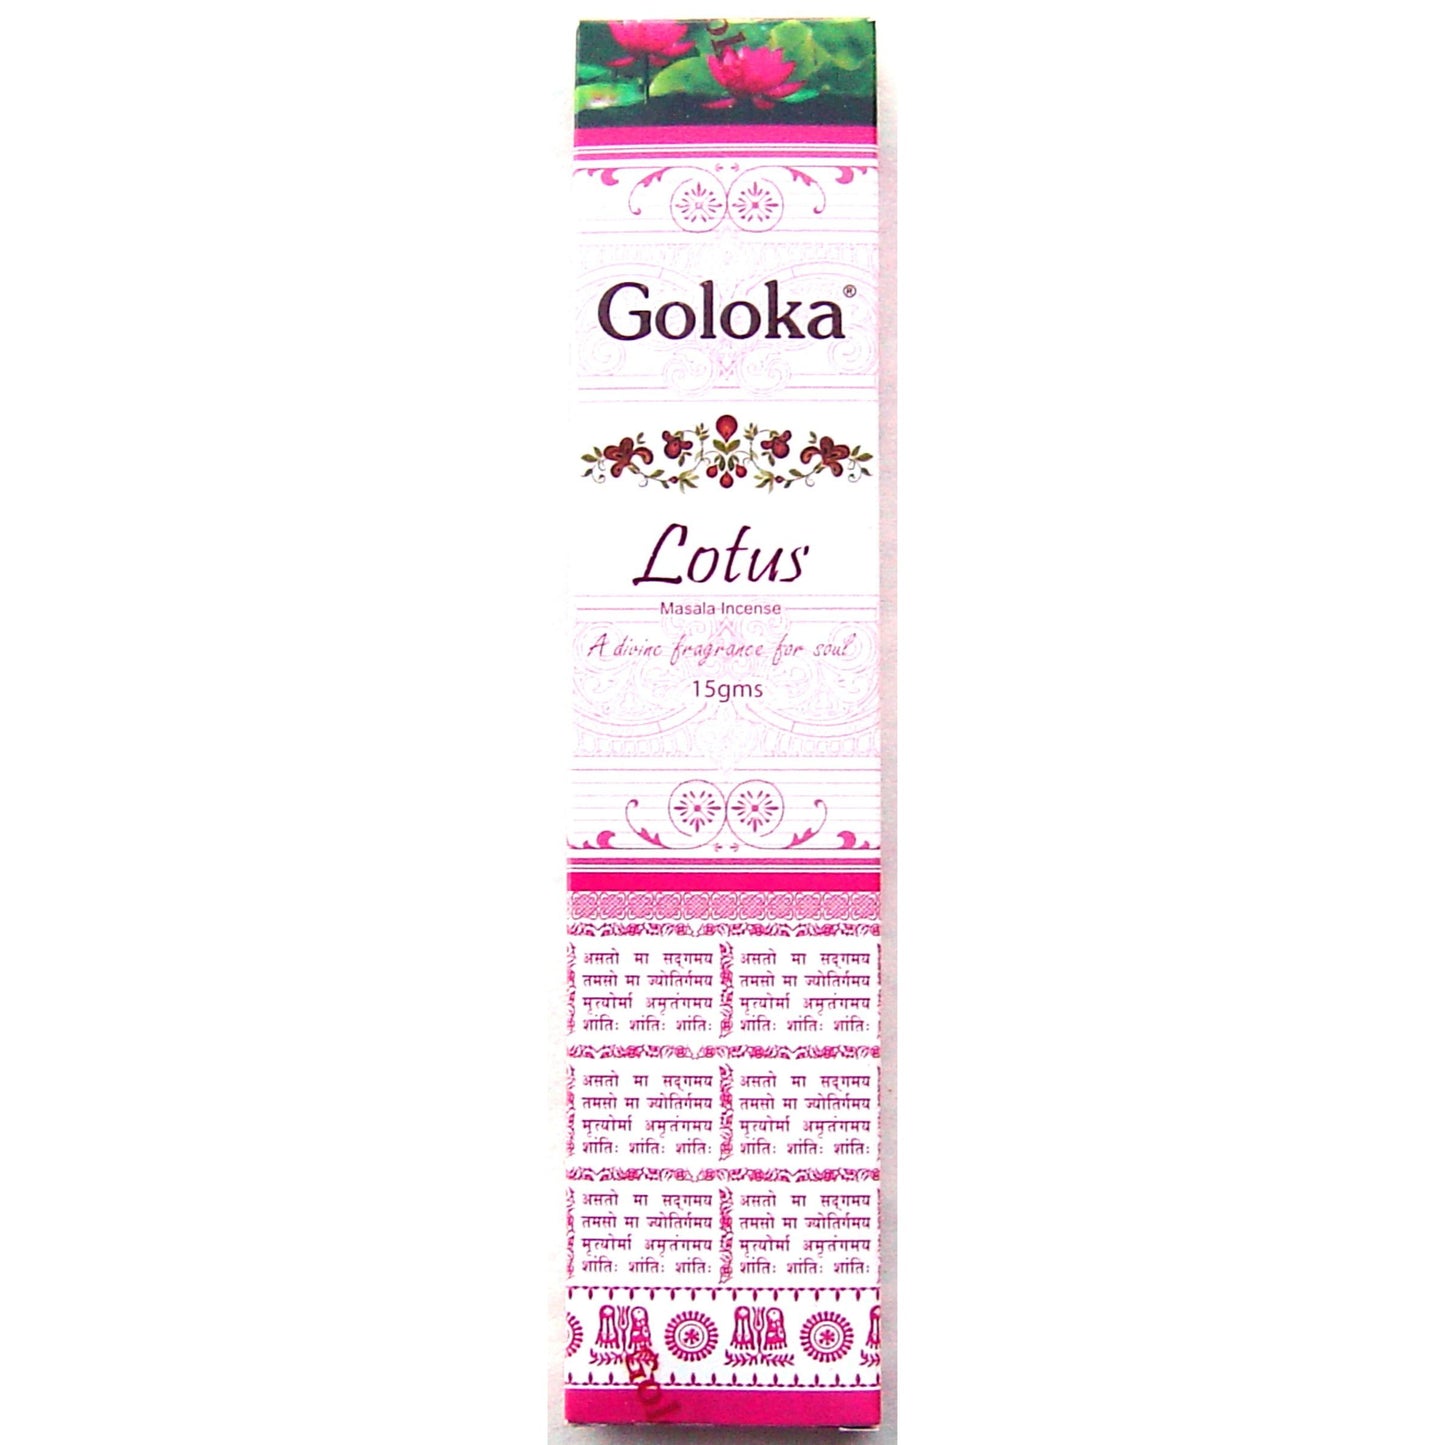 Goloka - Masala, Lotus